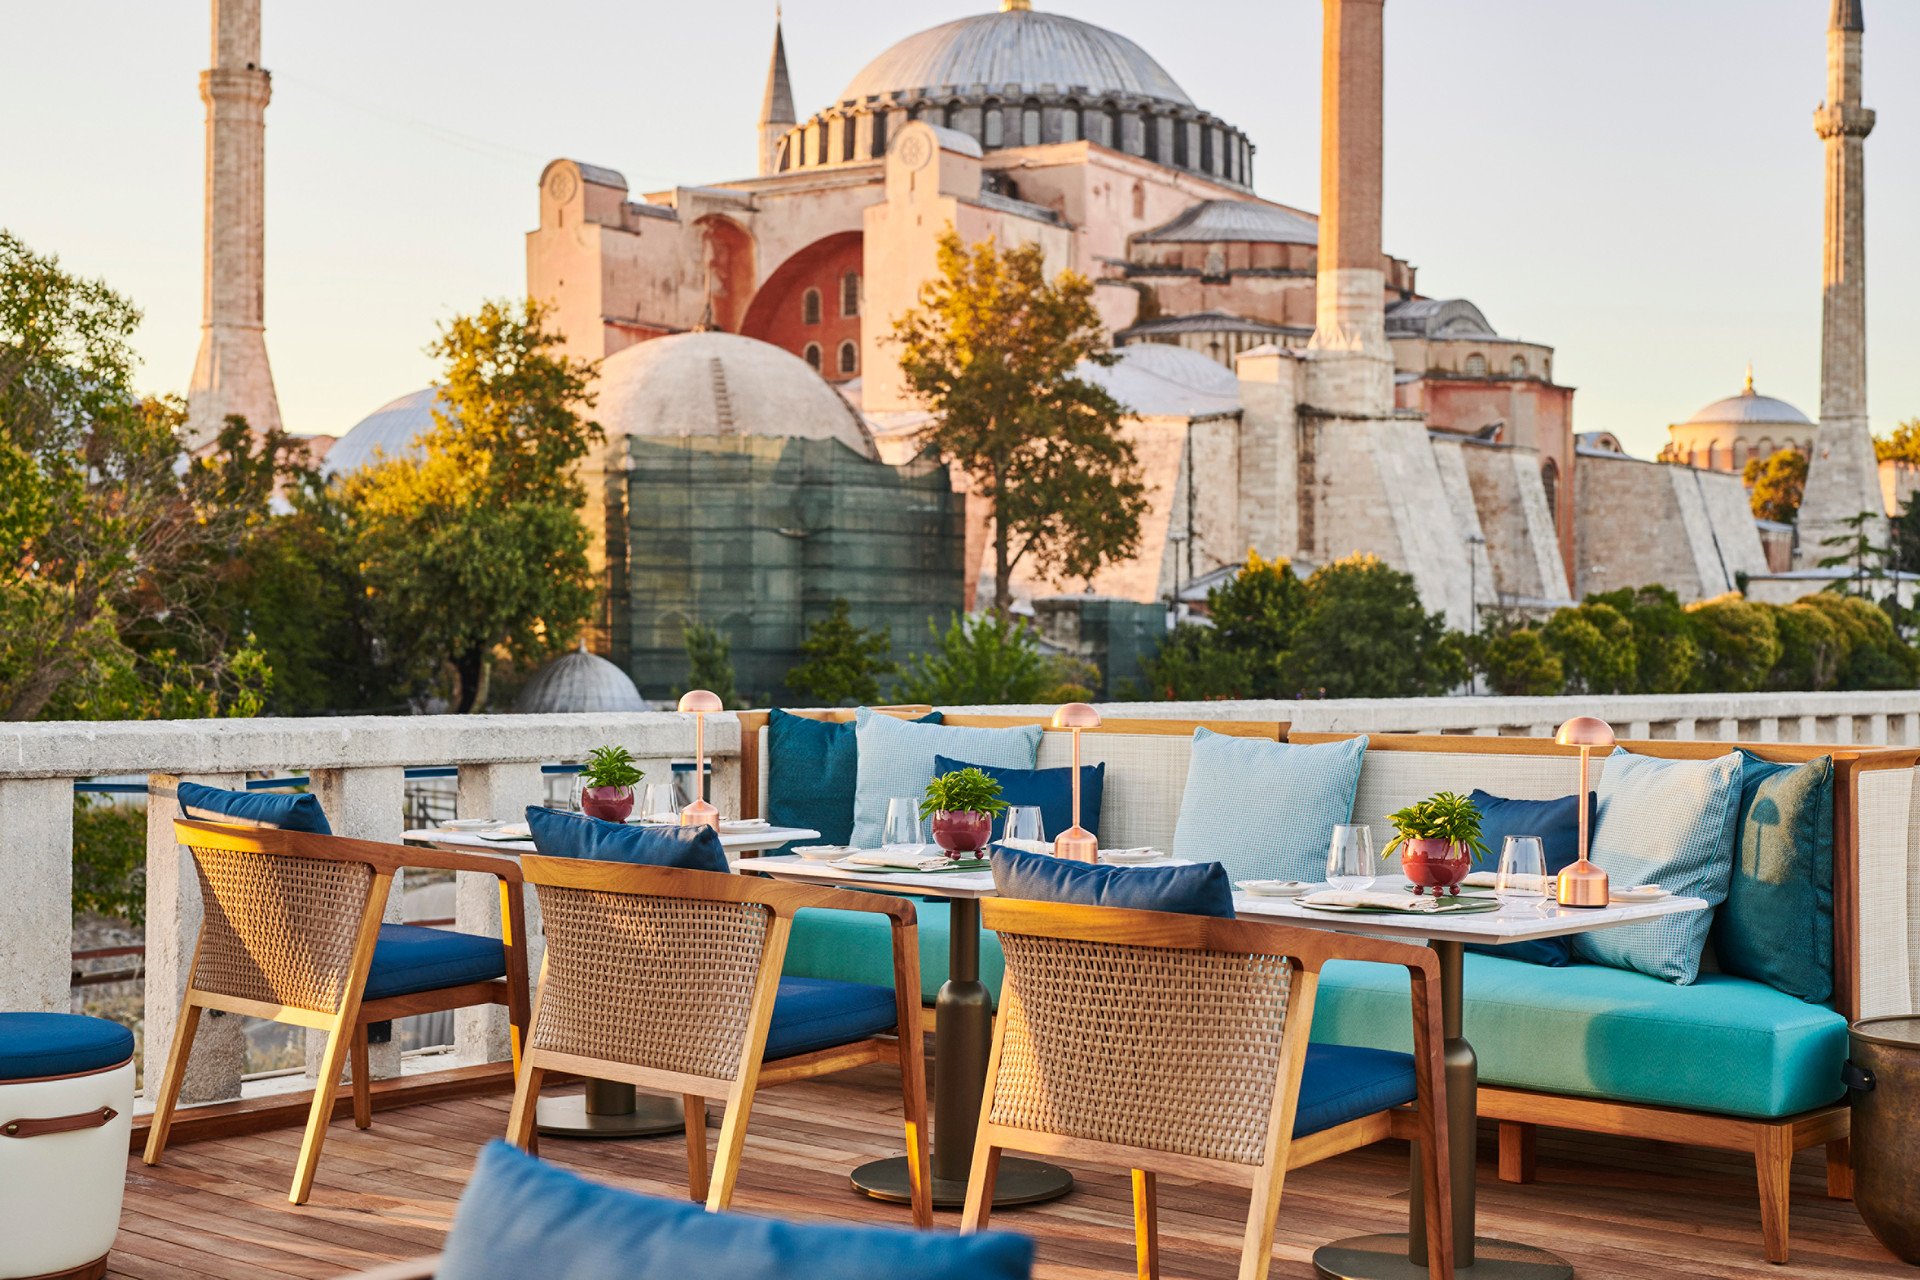 Four Seasons Istanbul at the Bosphorus